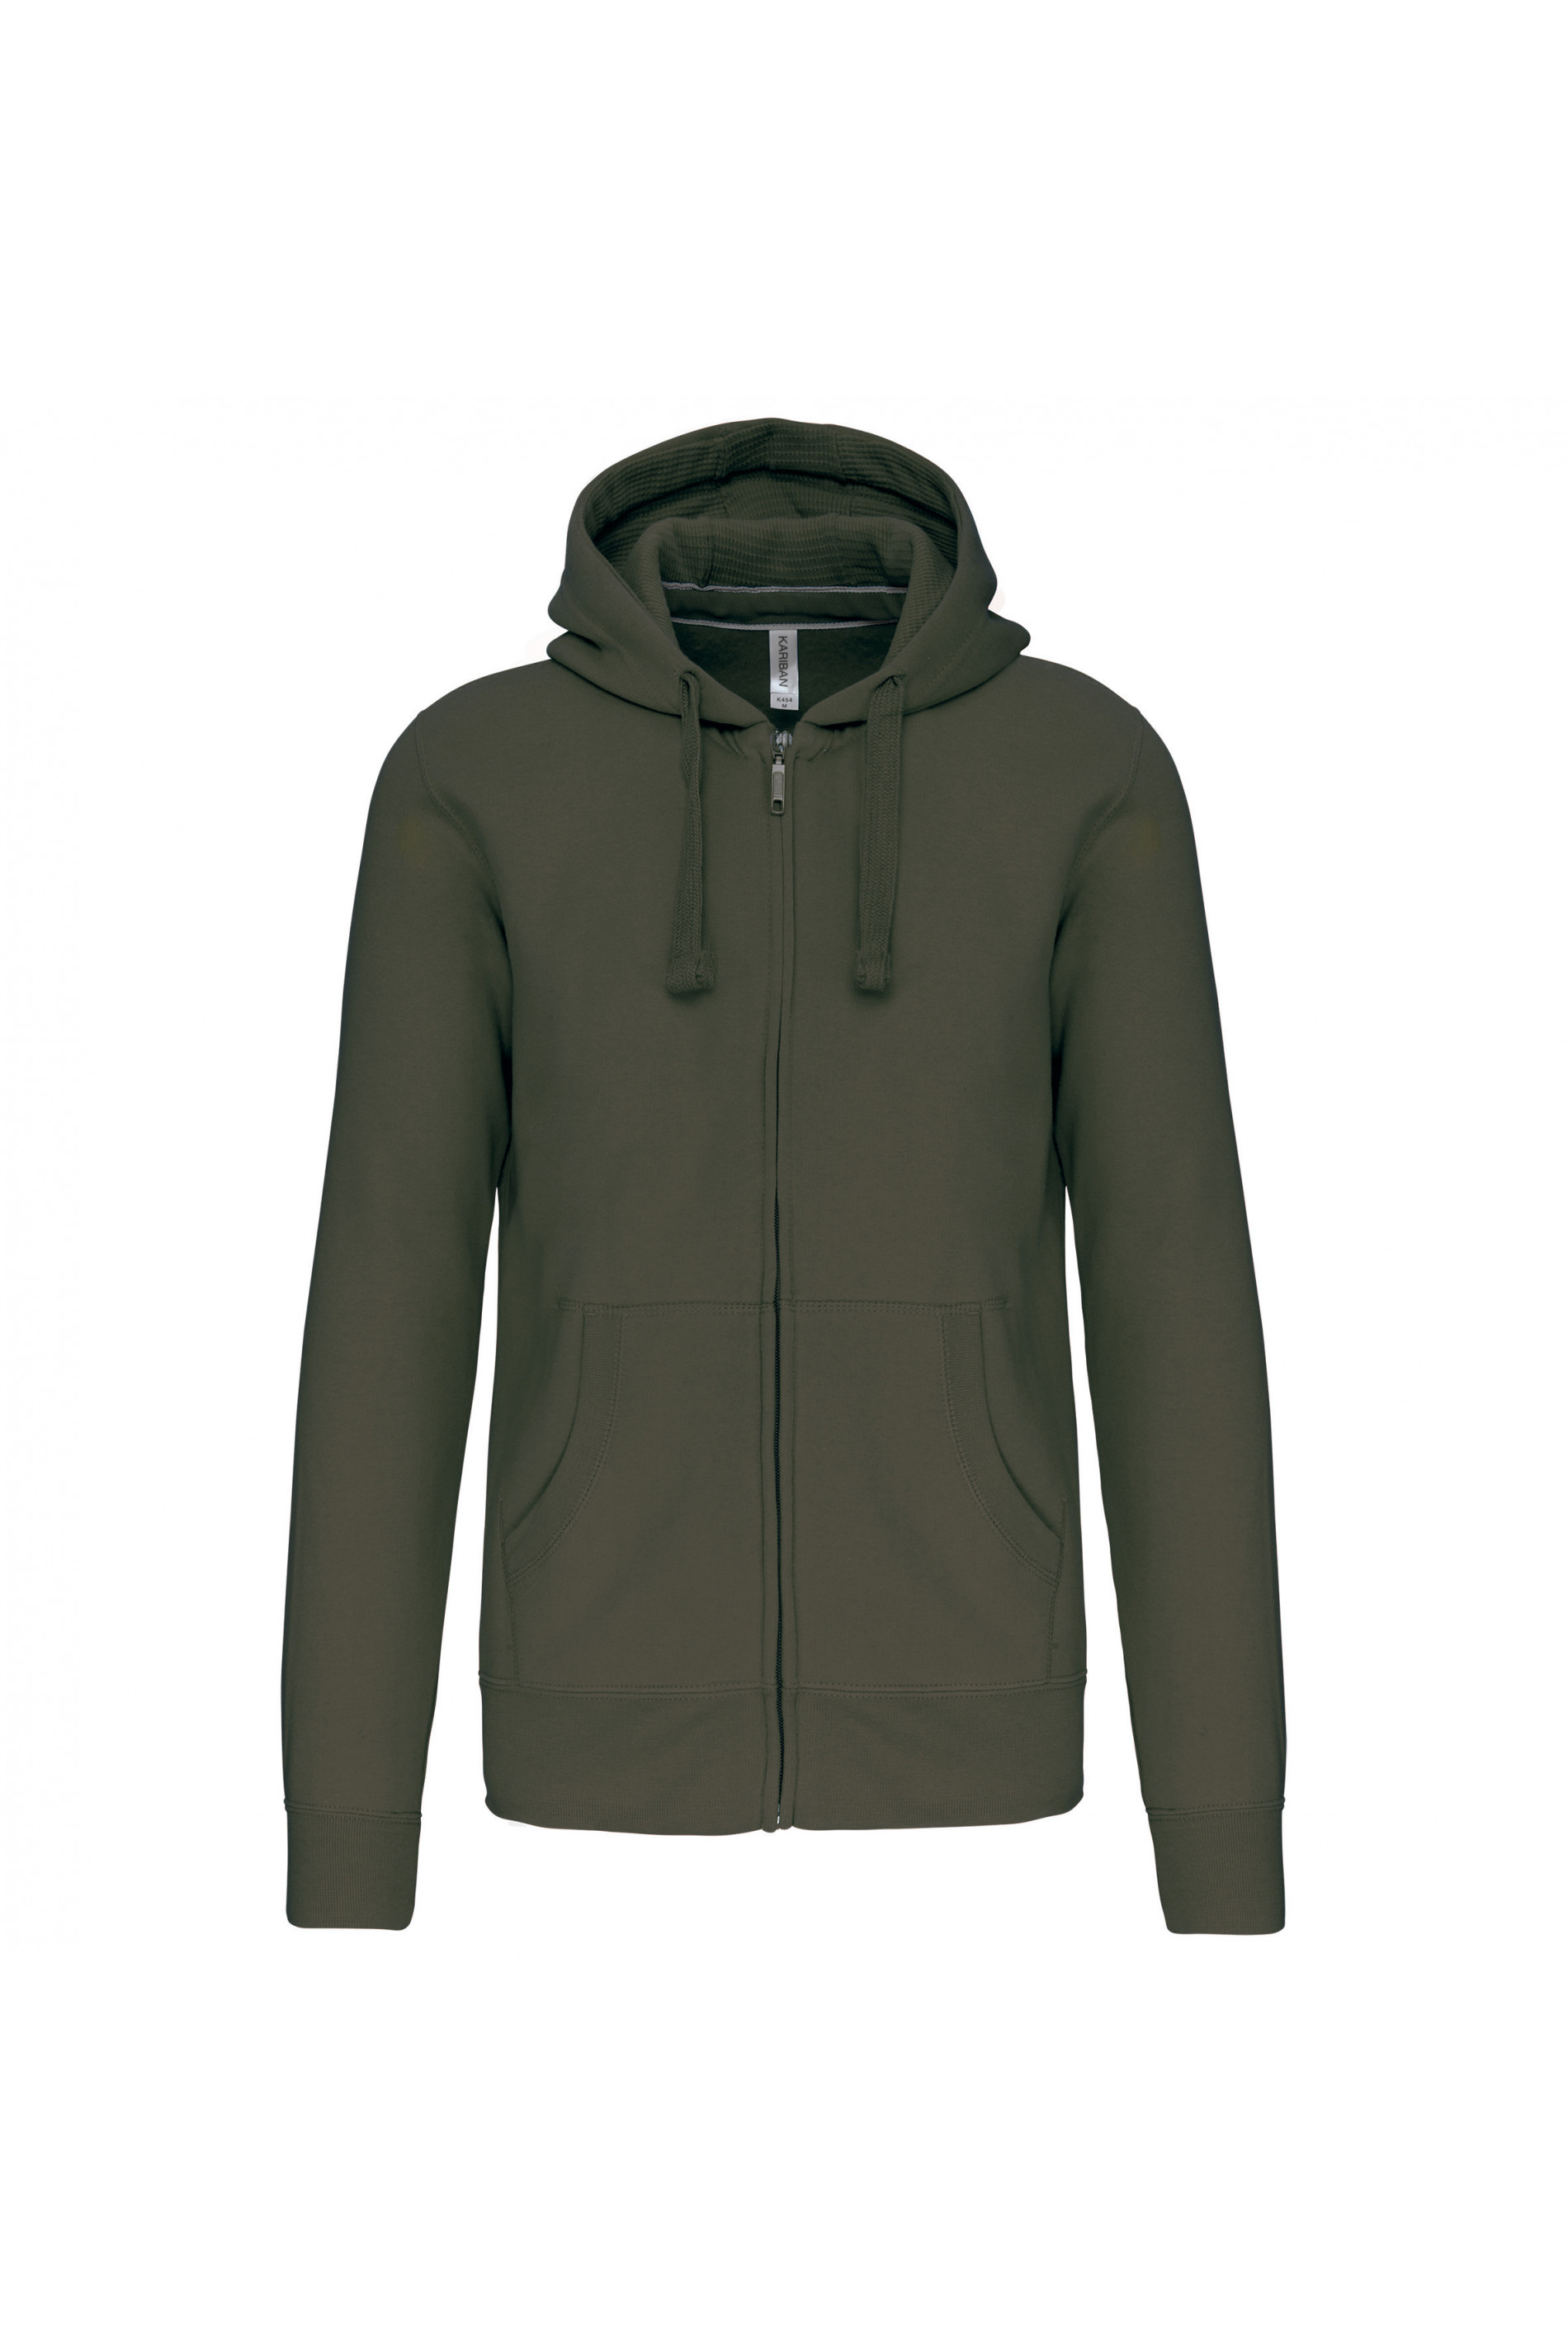 Full zip hooded sweatshirt K454 300 gr